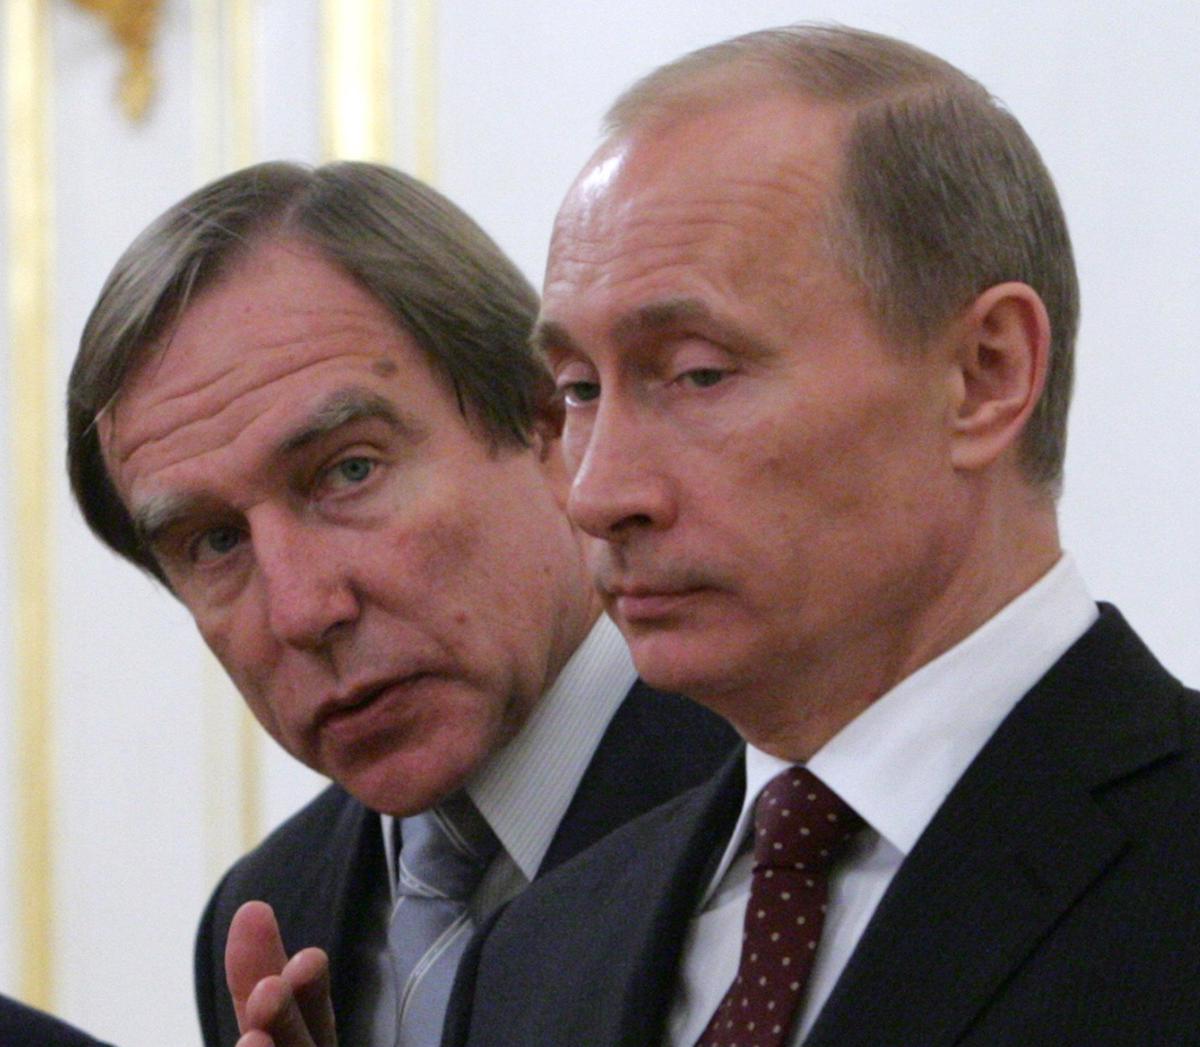 According to the State Secretariat for Economic Affairs, Sergey Roldugin (left) is 